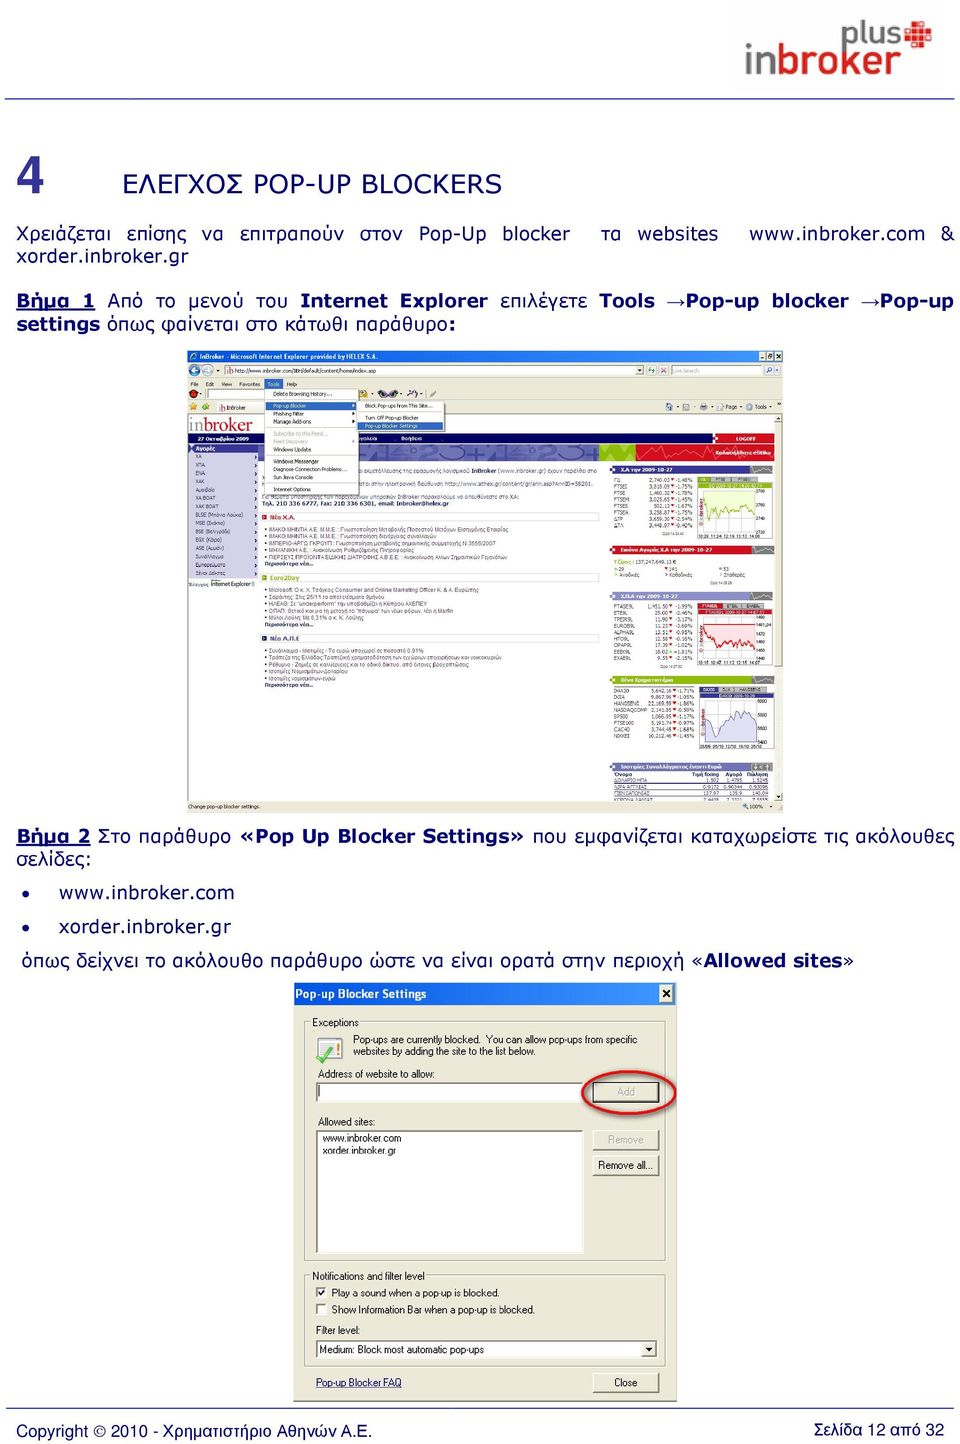 gr Βήµα 1 Από το µενού του Internet Explorer επιλέγετε Tools Pop-up blocker Pop-up settings όπως φαίνεται στο κάτωθι παράθυρο: Βήµα